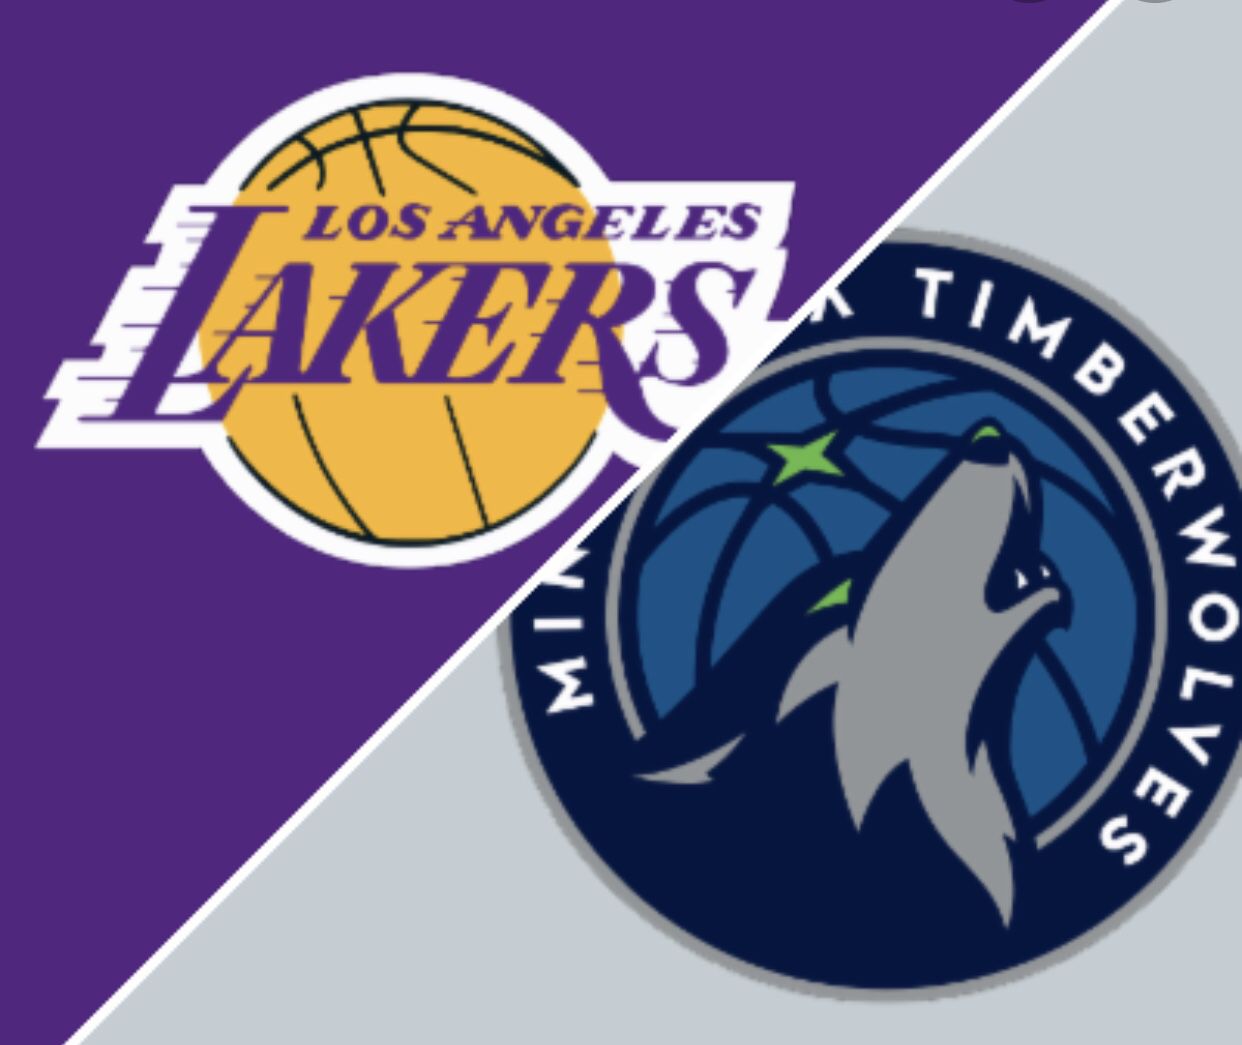 LA Lakers vs. Minnesota Timberwolves- Tickets for Sunday, 12/8 @ 6:30pm